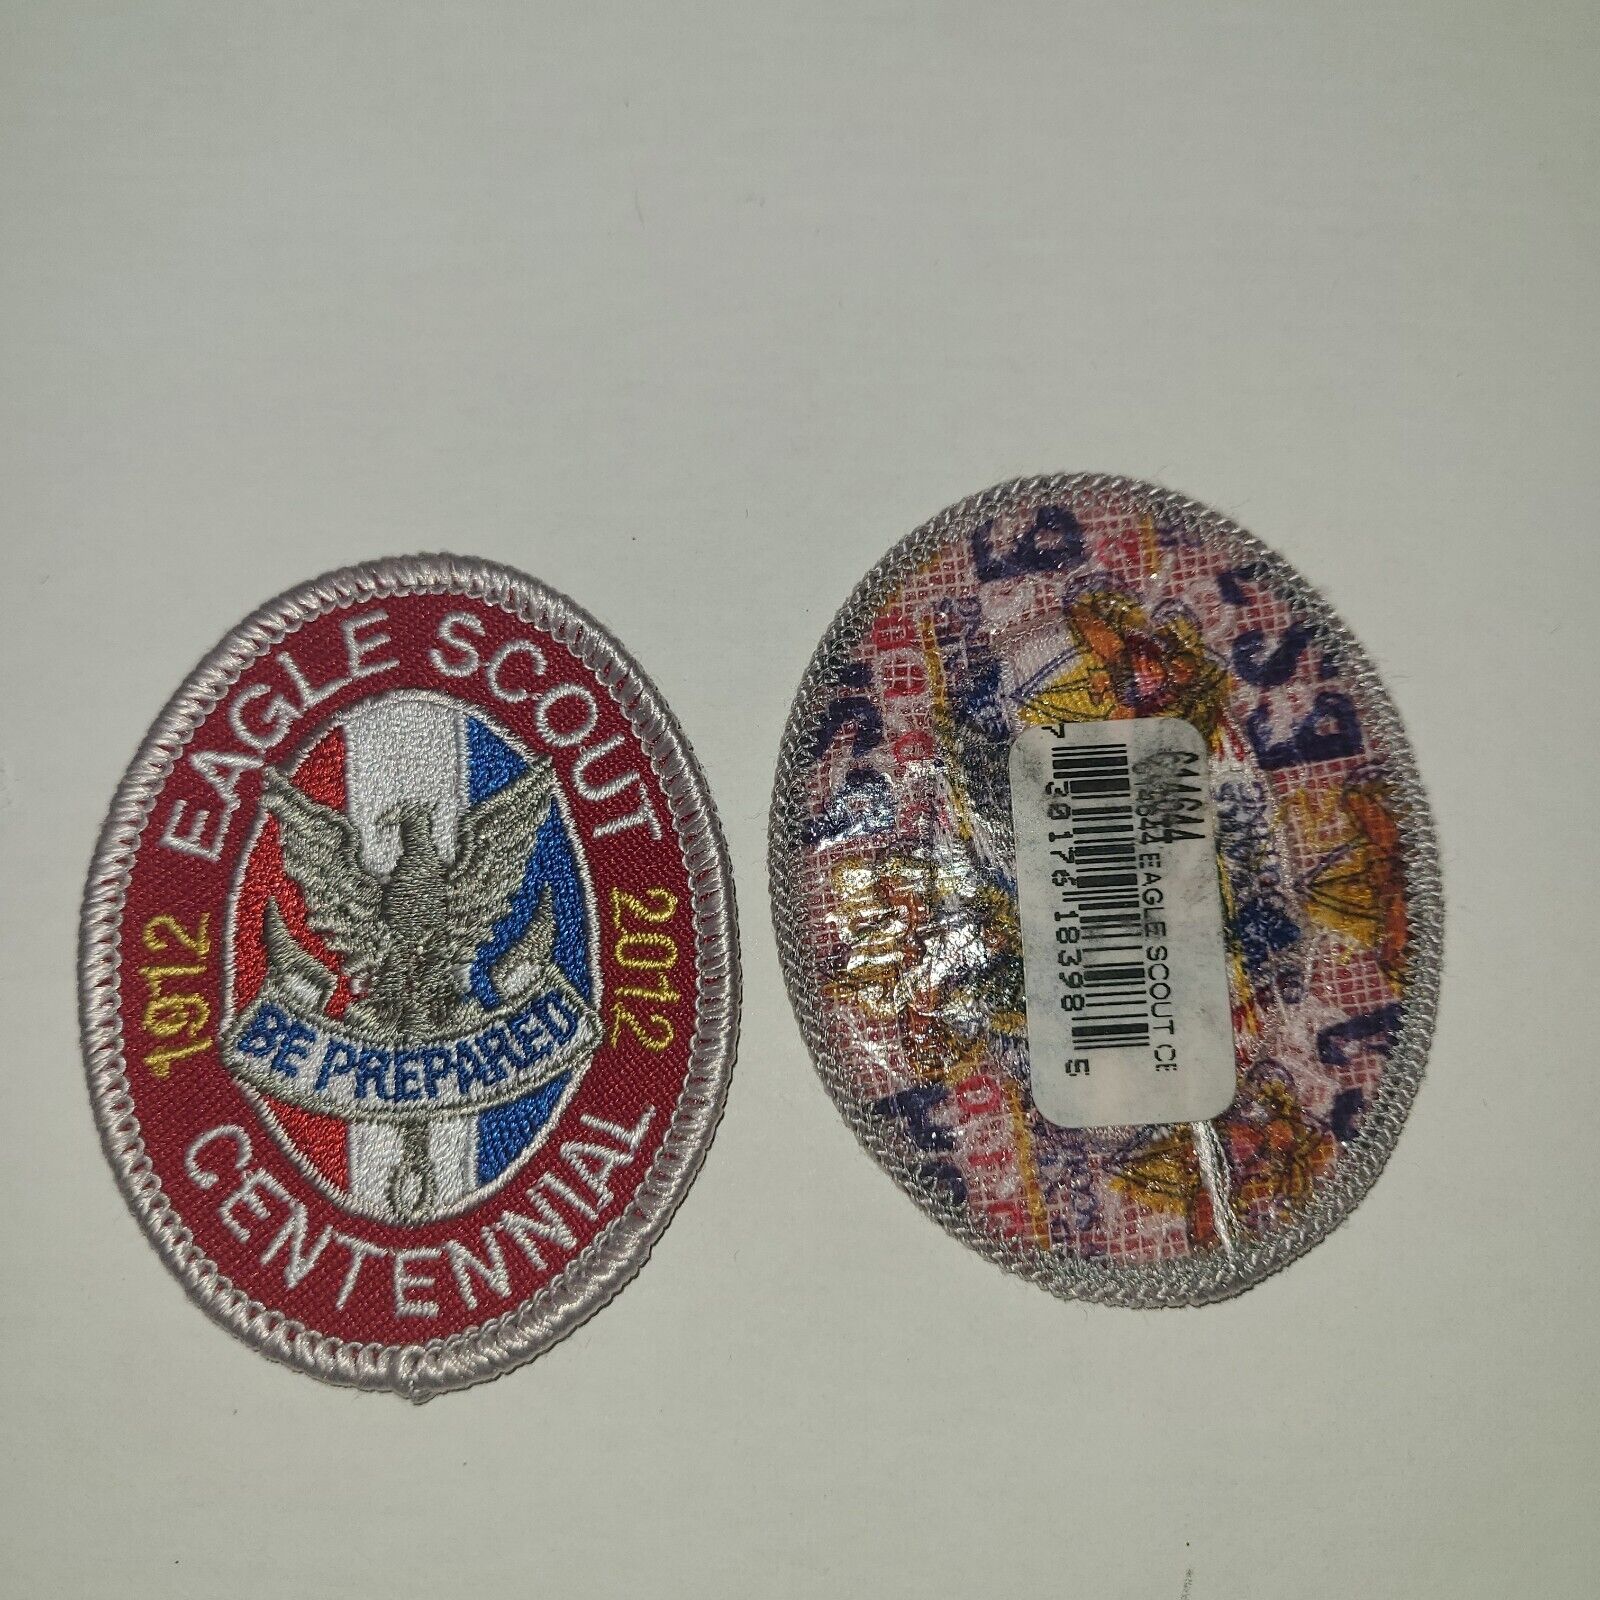 Eagle Scout Rank Patch 1912-2012